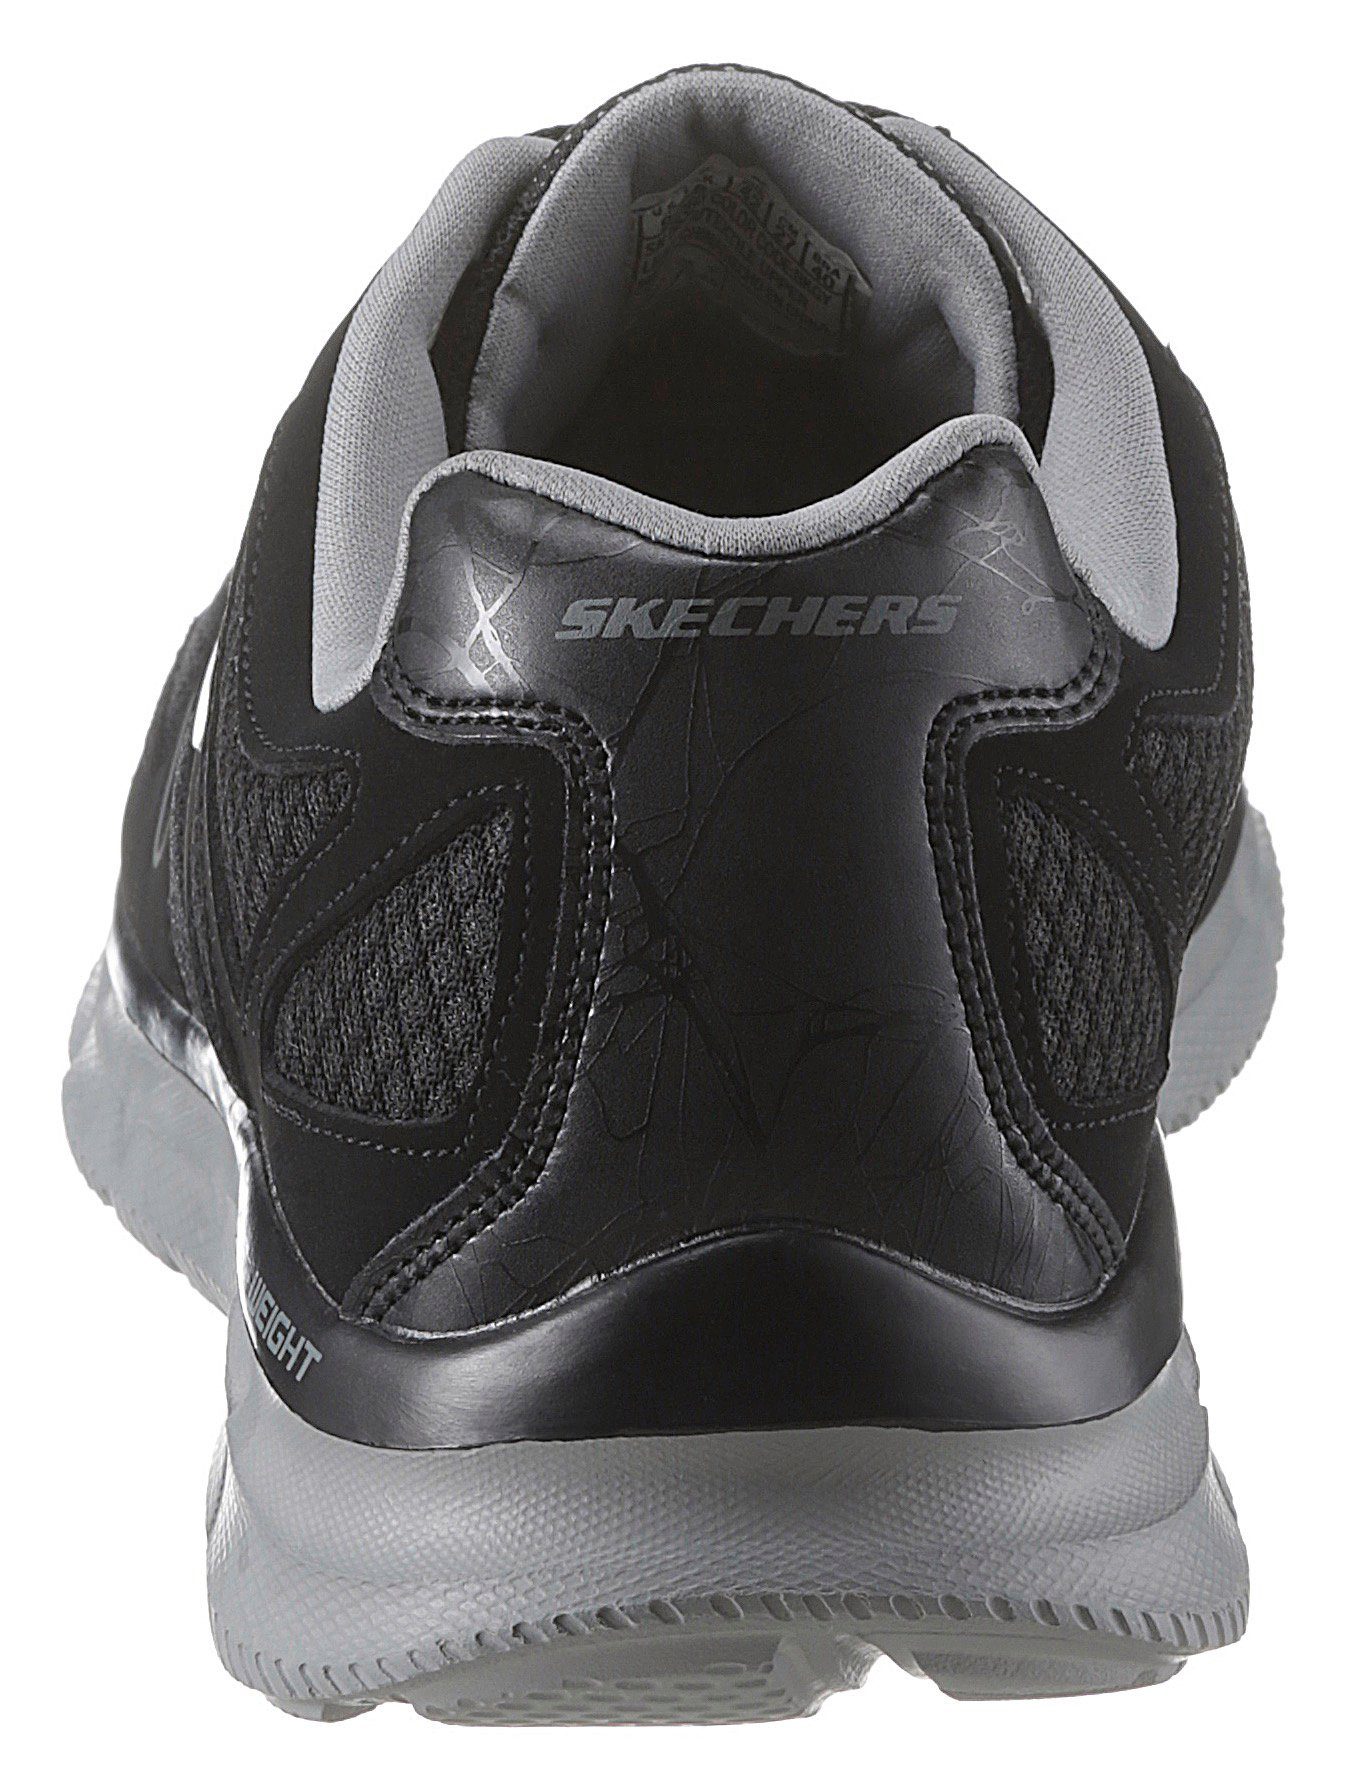 Memory Skechers Foam-Ausstattung schwarz Sneaker Verse komfortabler mit